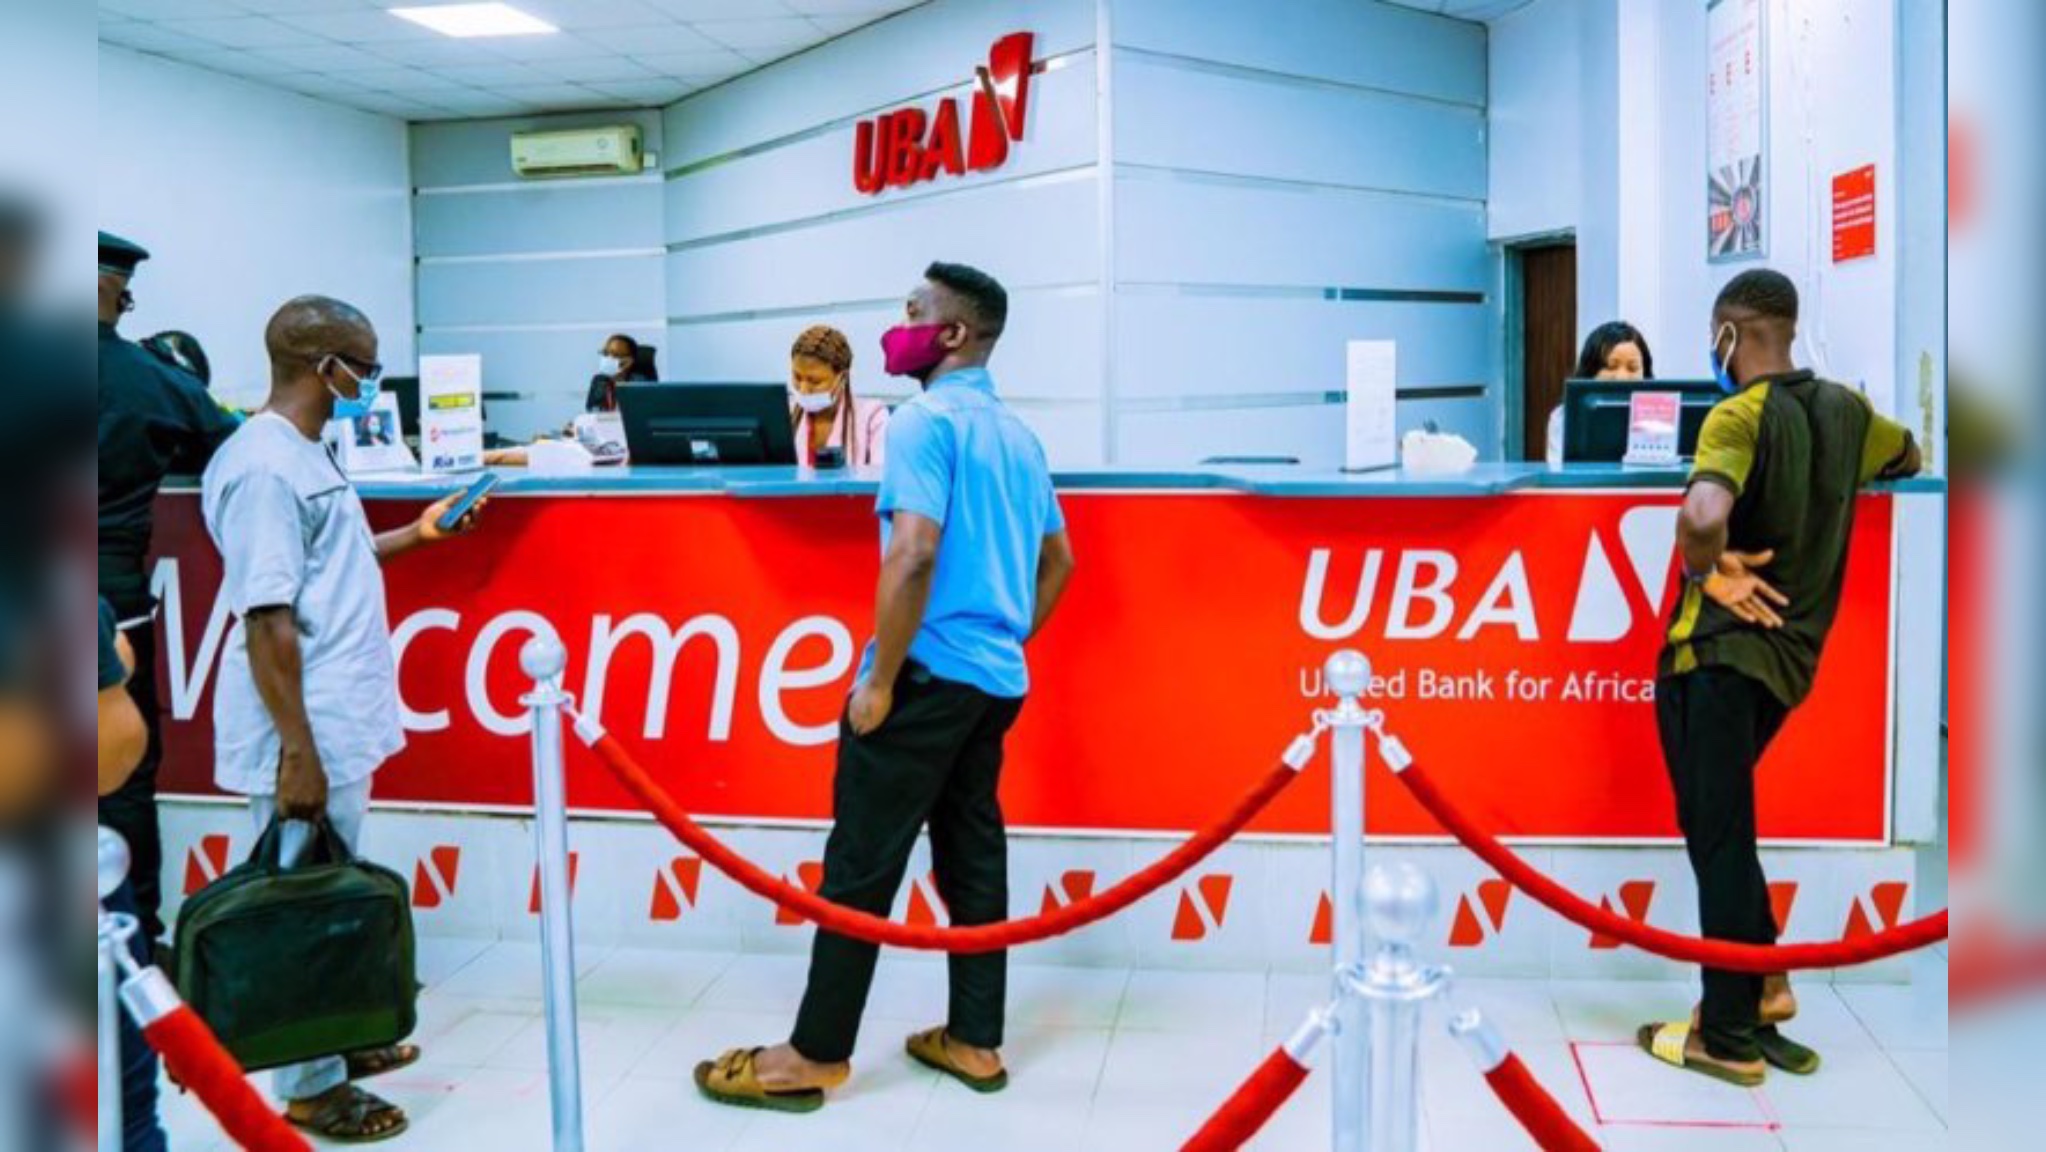 UNITED BANK FOR AFRICA (UBA) UGANDA ADDRESSES ALLEGATIONS OF FRAUD ON CUSTOMER ACCOUNT